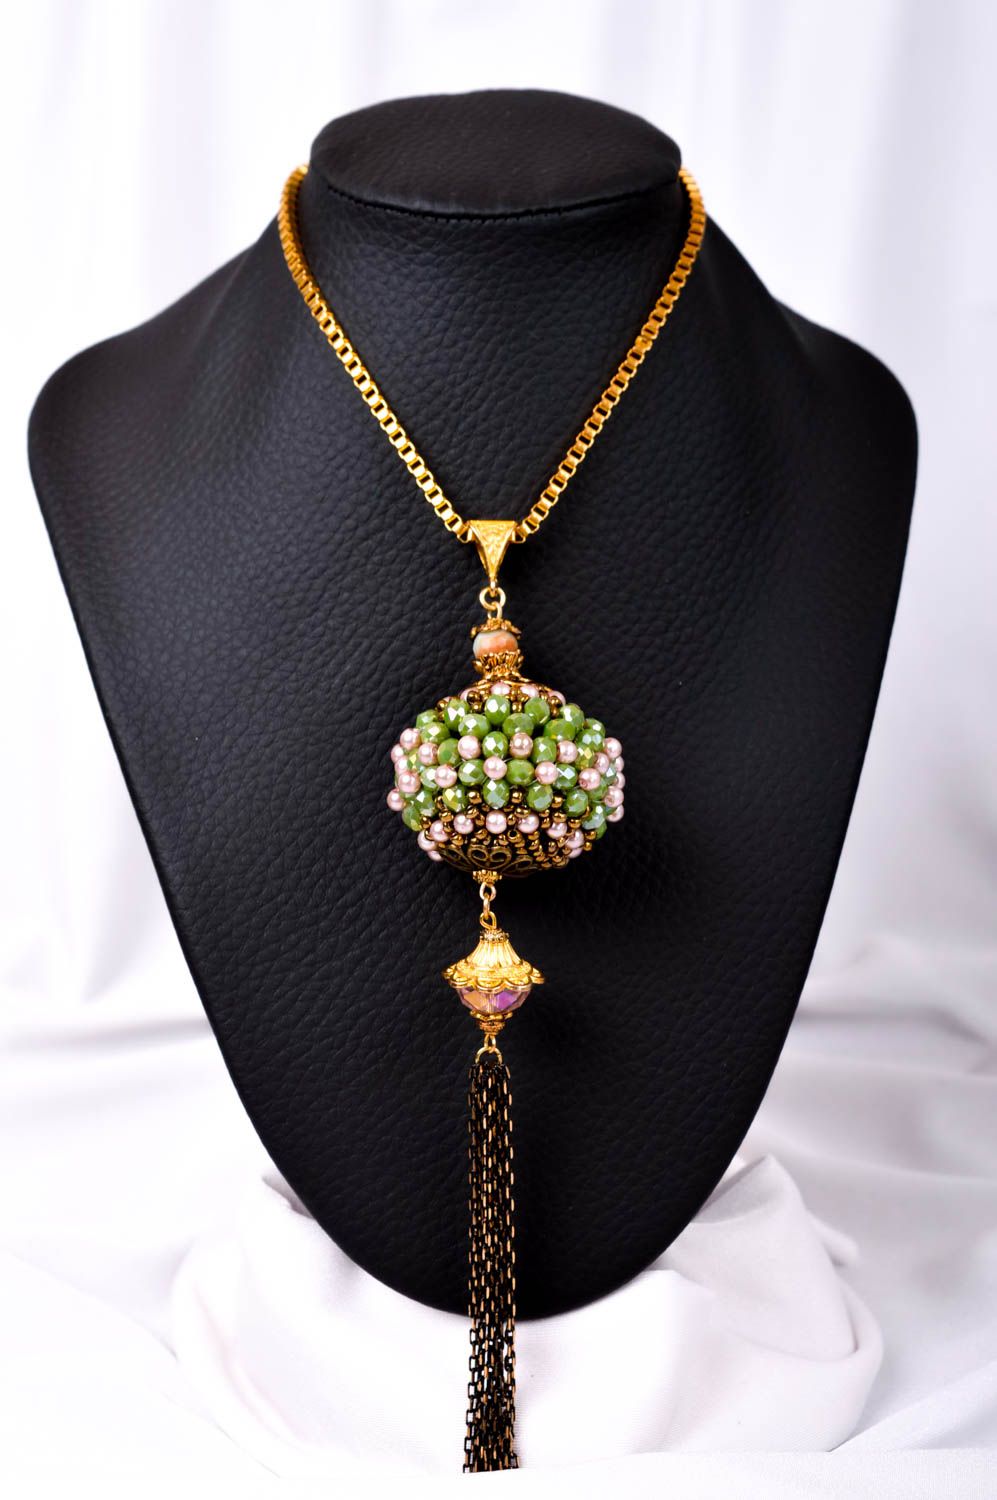 Handmade pendant designer pendant unusual accessory luxury jewelry gift ideas photo 1